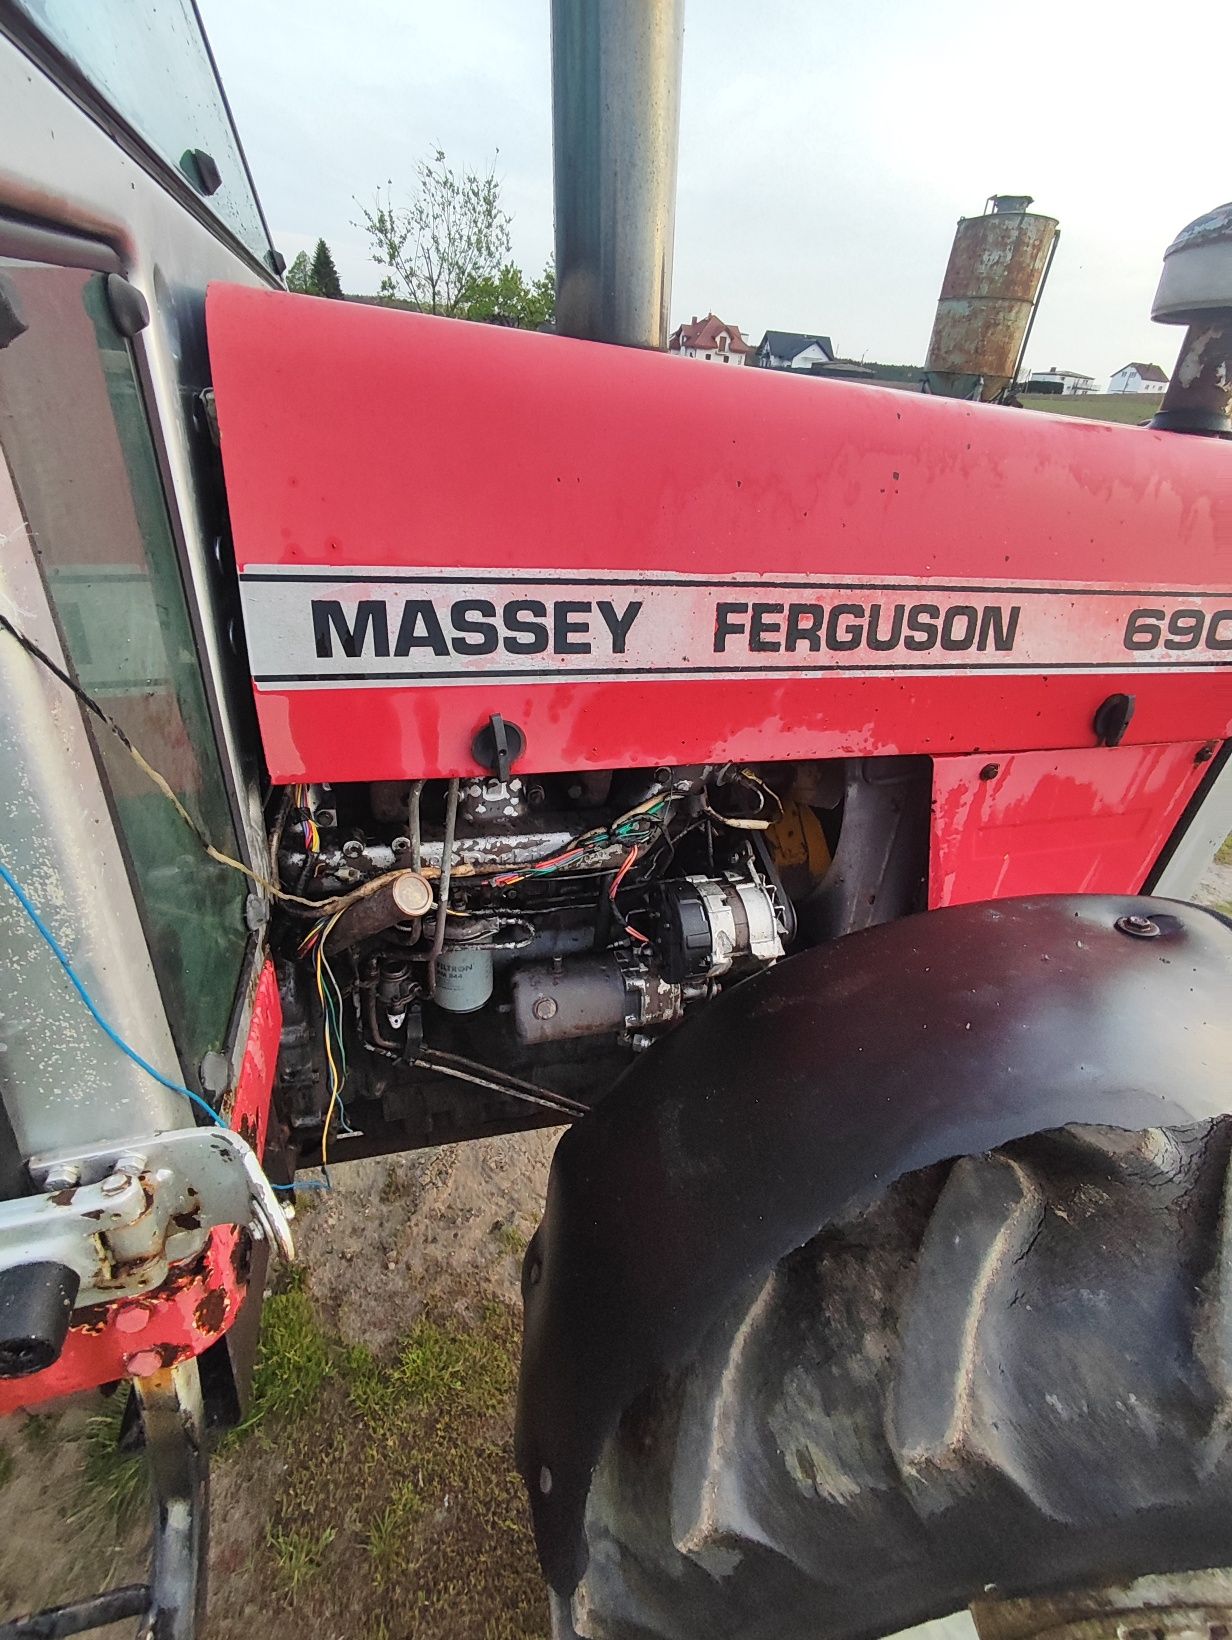 Massey Ferguson 690